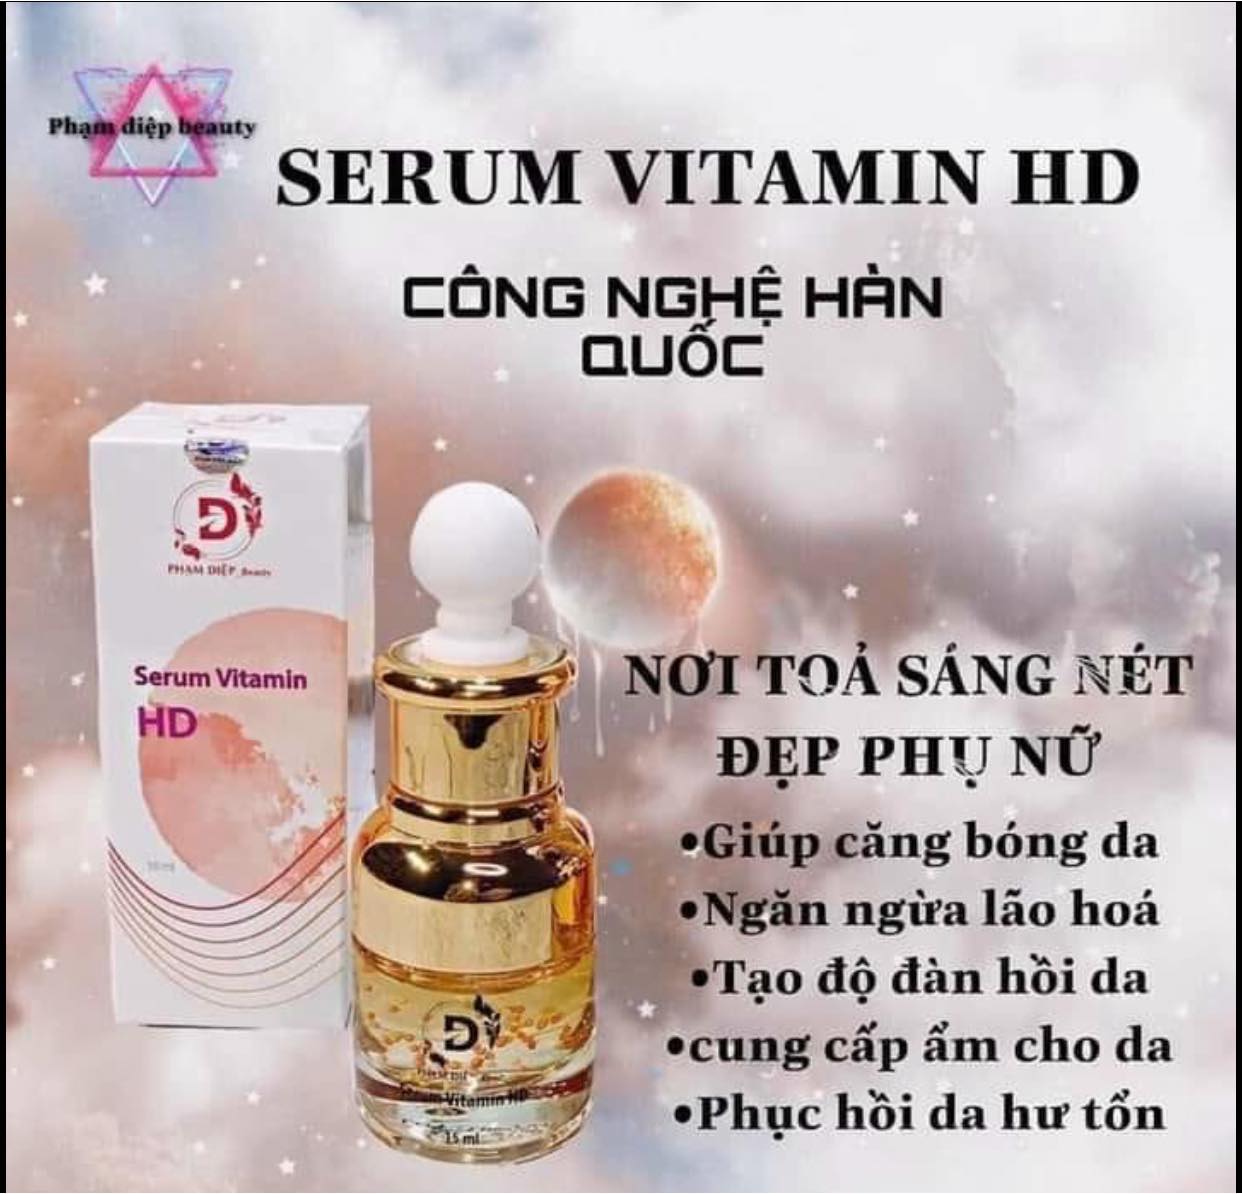 Serum vitamin HD